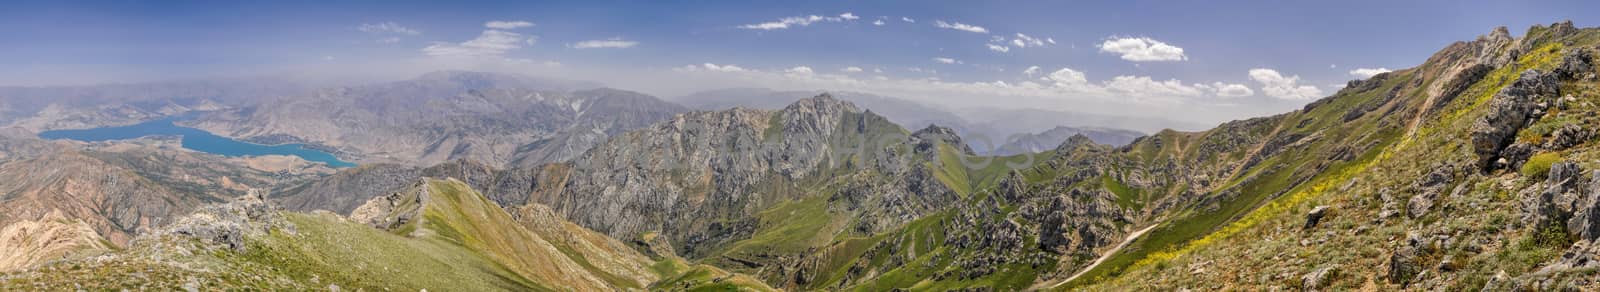 Scenic panorama of mountainous landscape of Tian Shan mountain range near Chimgan  in Uzbekistan